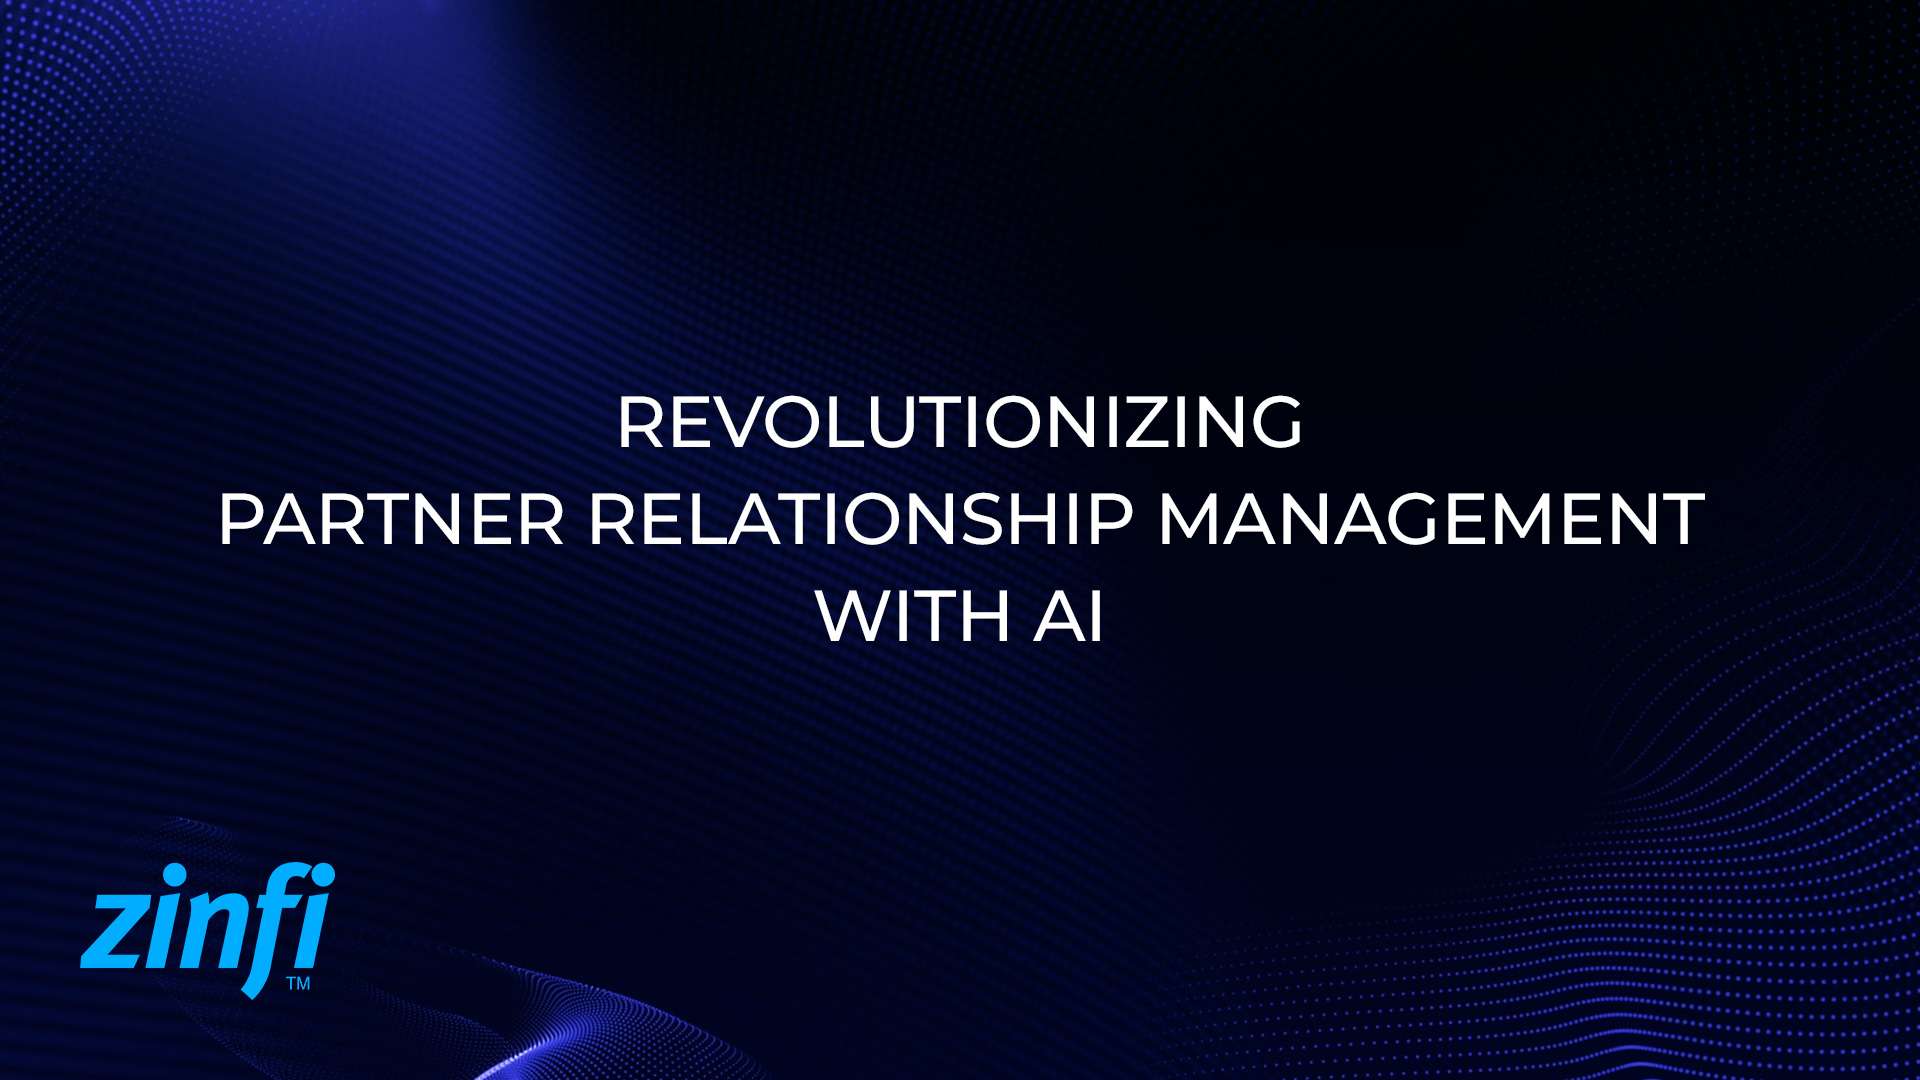 Revolutionizing Partner Relationship Management with AI